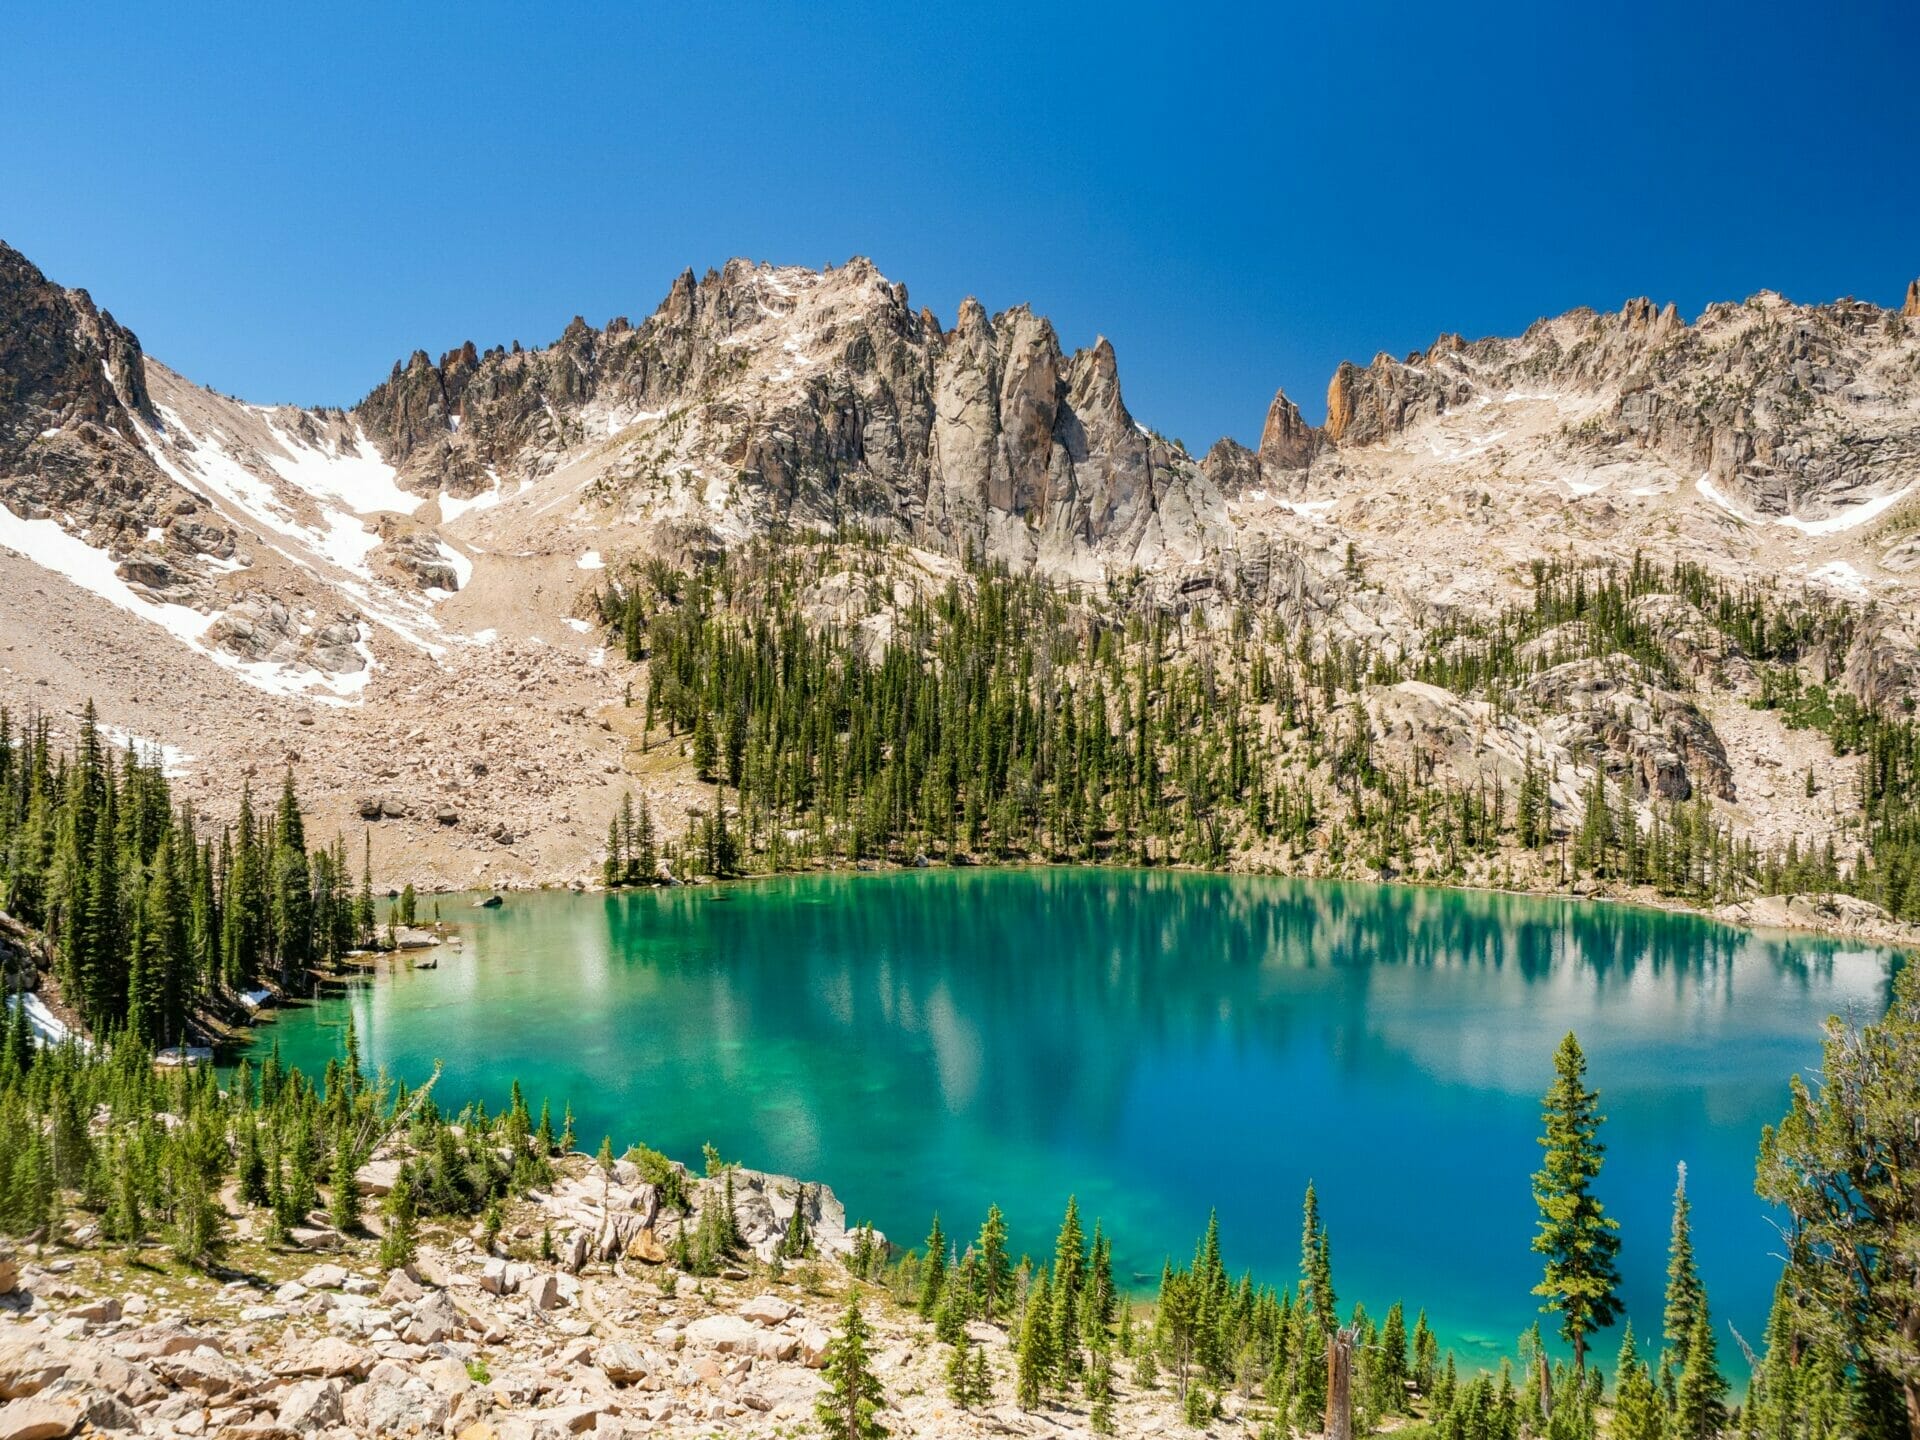 Hiking Idaho's most beautiful alpine lake in Stanley, Idaho